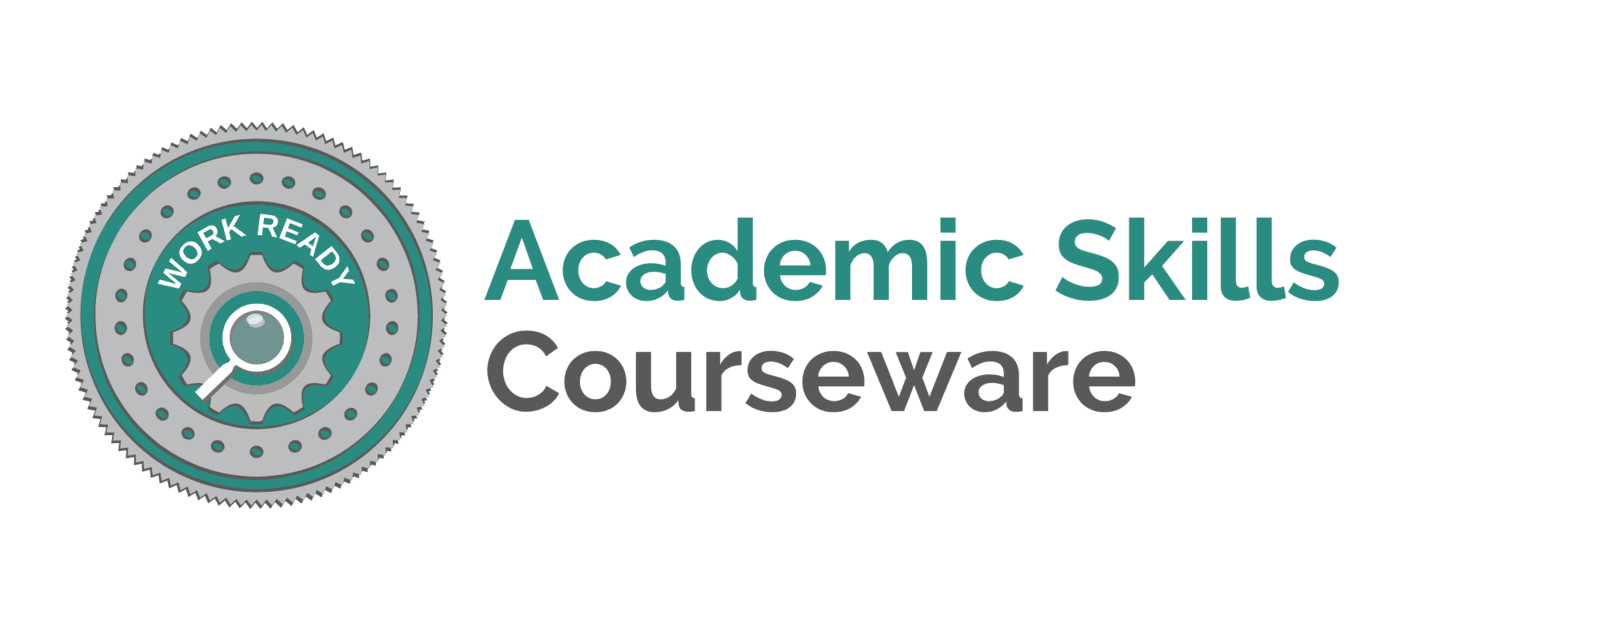 Academic Skills Courseware